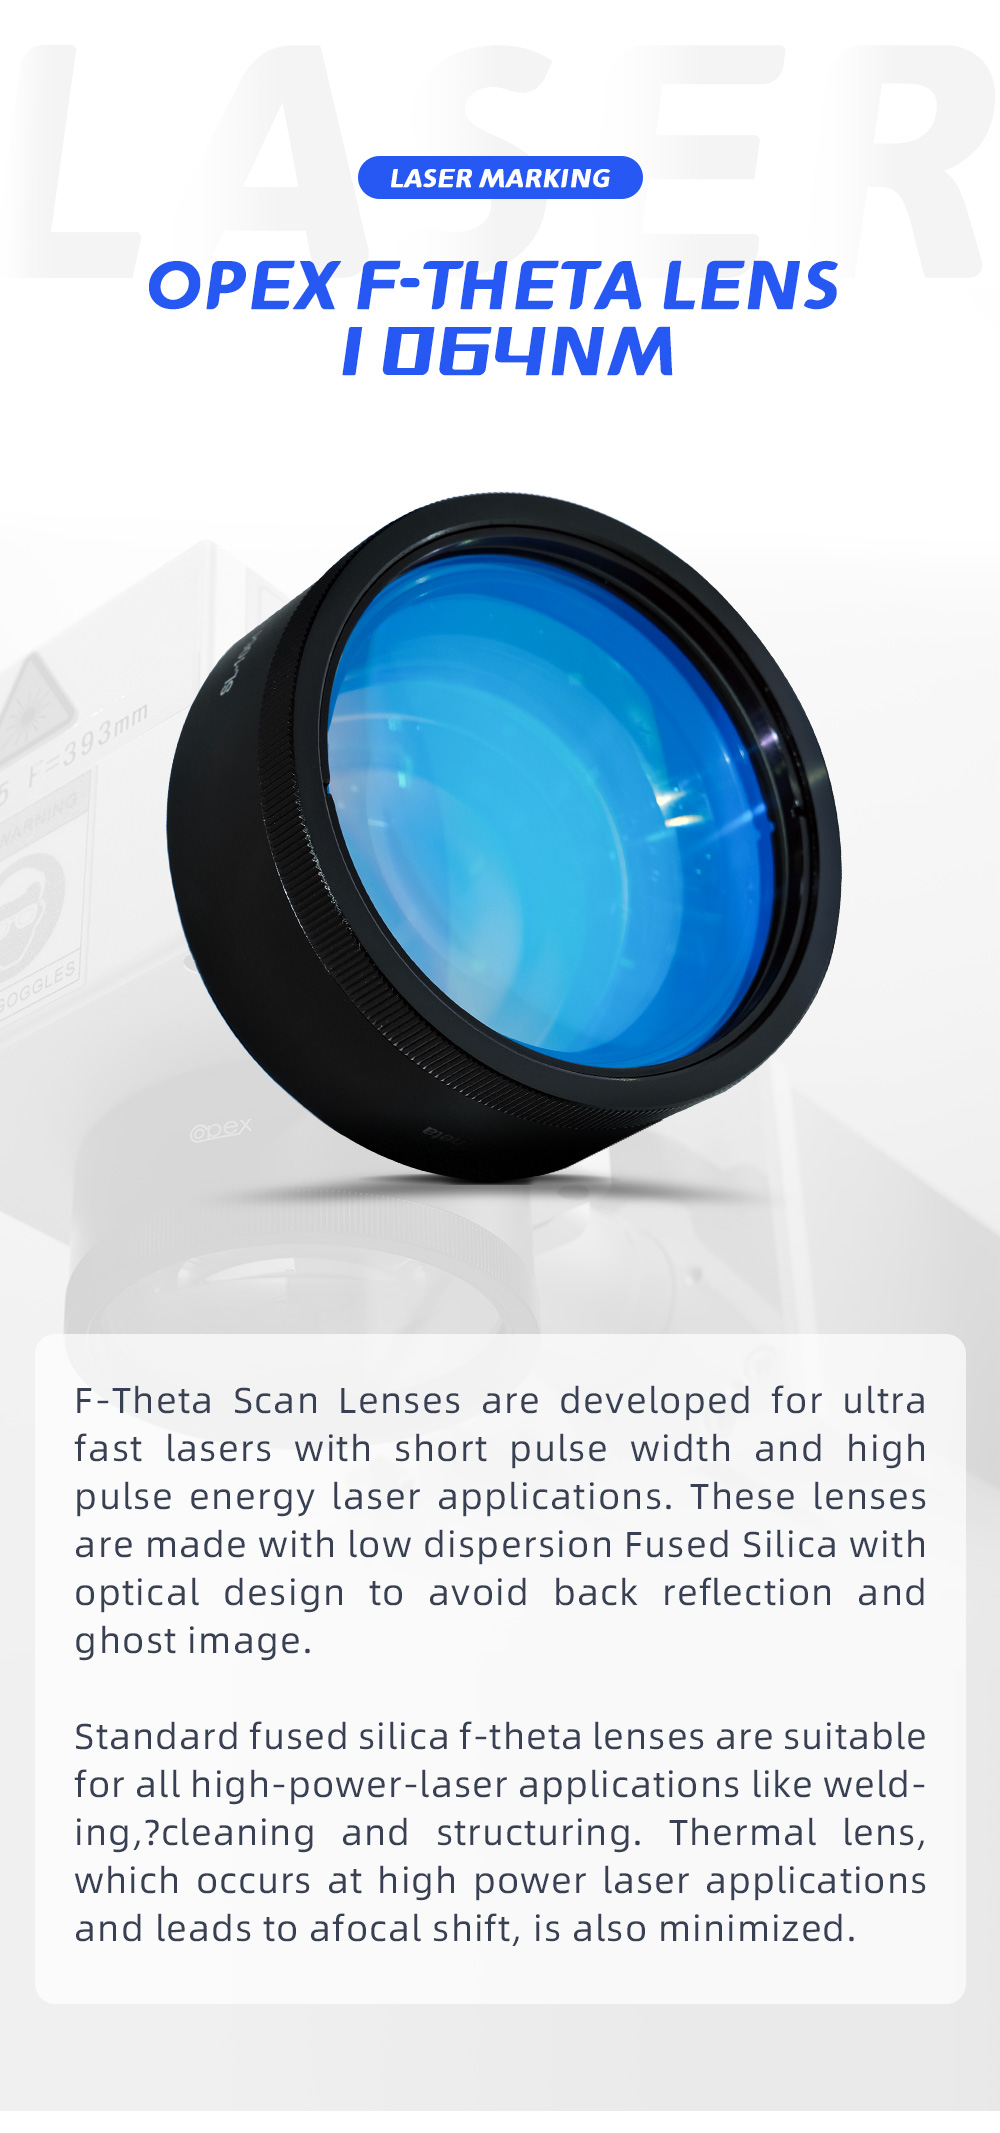 SFX Fiber Laser Engraving Machine OPEX Fiber Laser Lens 70mm/110mm/150mm/175mm/220mm/300mm F-theta Lens Field Lens 1064nm SFX Fiber Laser Engraving Machine OPEX Fiber Laser Lens 70mm/110mm/150mm/175mm/220mm/300mm F-theta Lens Field Lens 1064nm SFX laser,SFX 50w JPT,OPEX Fiber Laser Lens,70x70mm lens,110x110mm lens,150x150mm lens \,175x175mm lens,220x220mm lens,300x300mm lens,F-theta Lens,Field Lens,OPEX